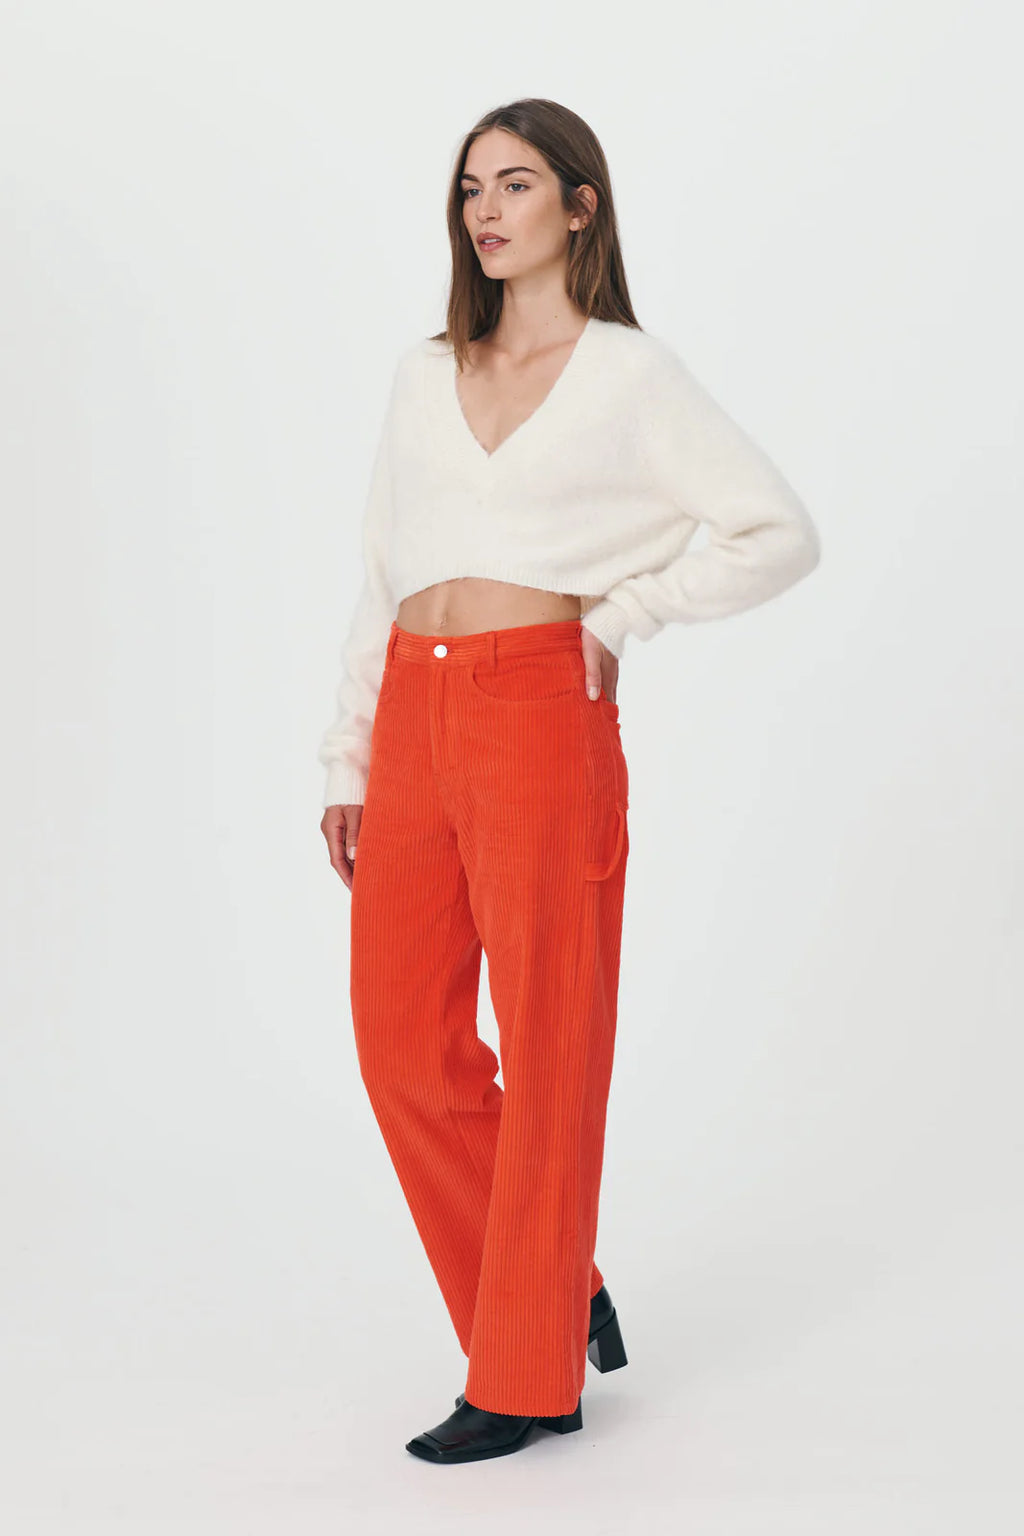 Rowie - Mario Cord Jeans - Spicy Orange